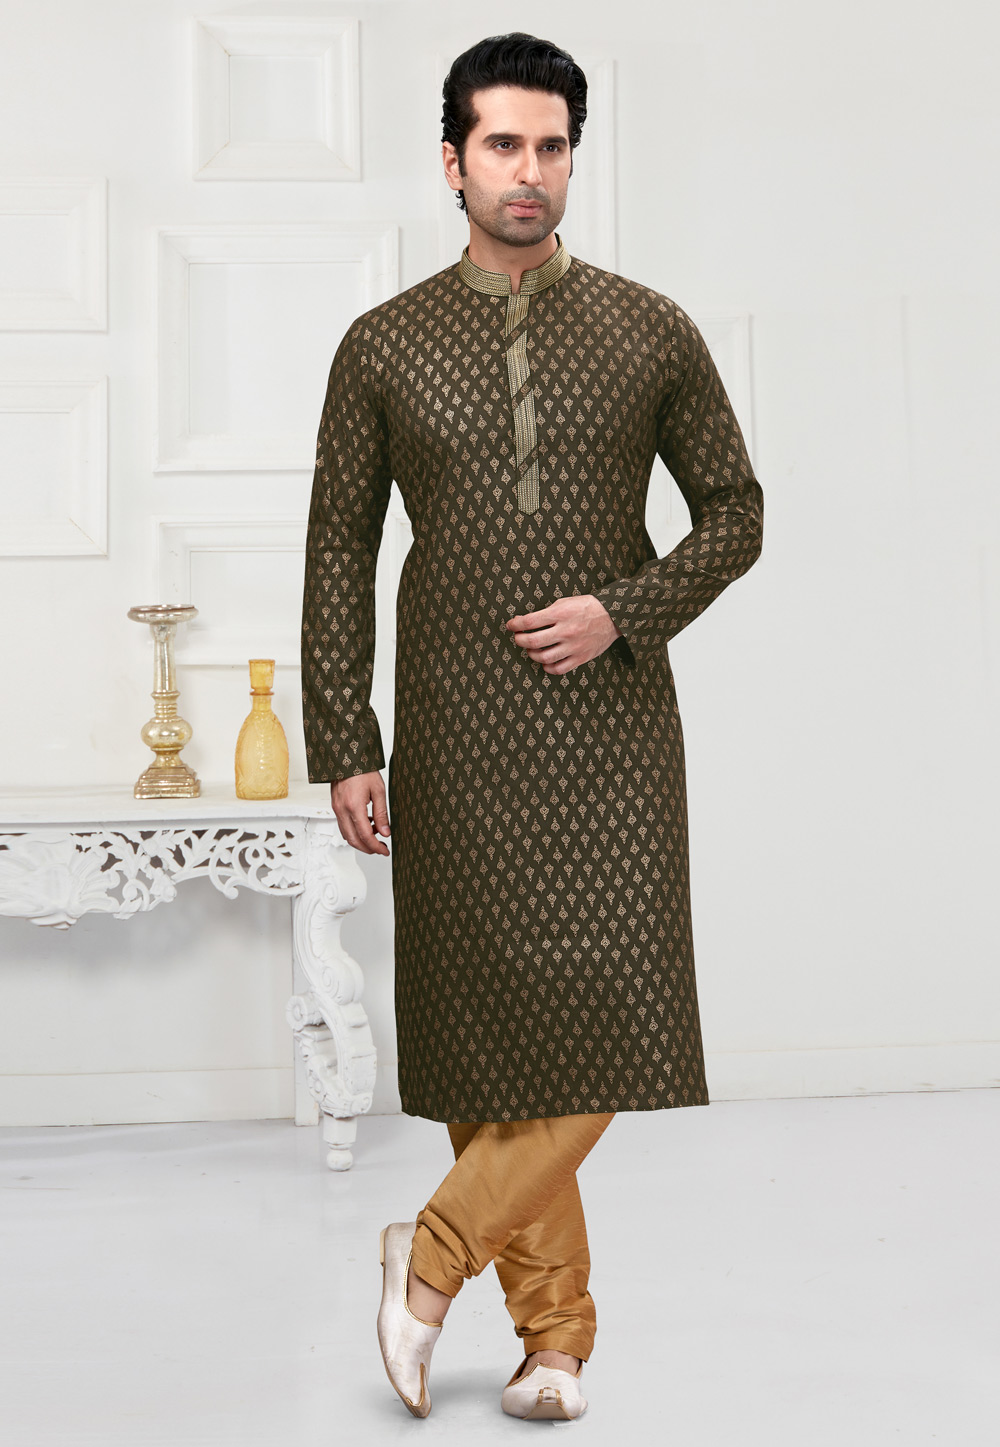 Buy Indian Kurta Pajama For Men, Online, In Latest Styles at Utsav Fashion